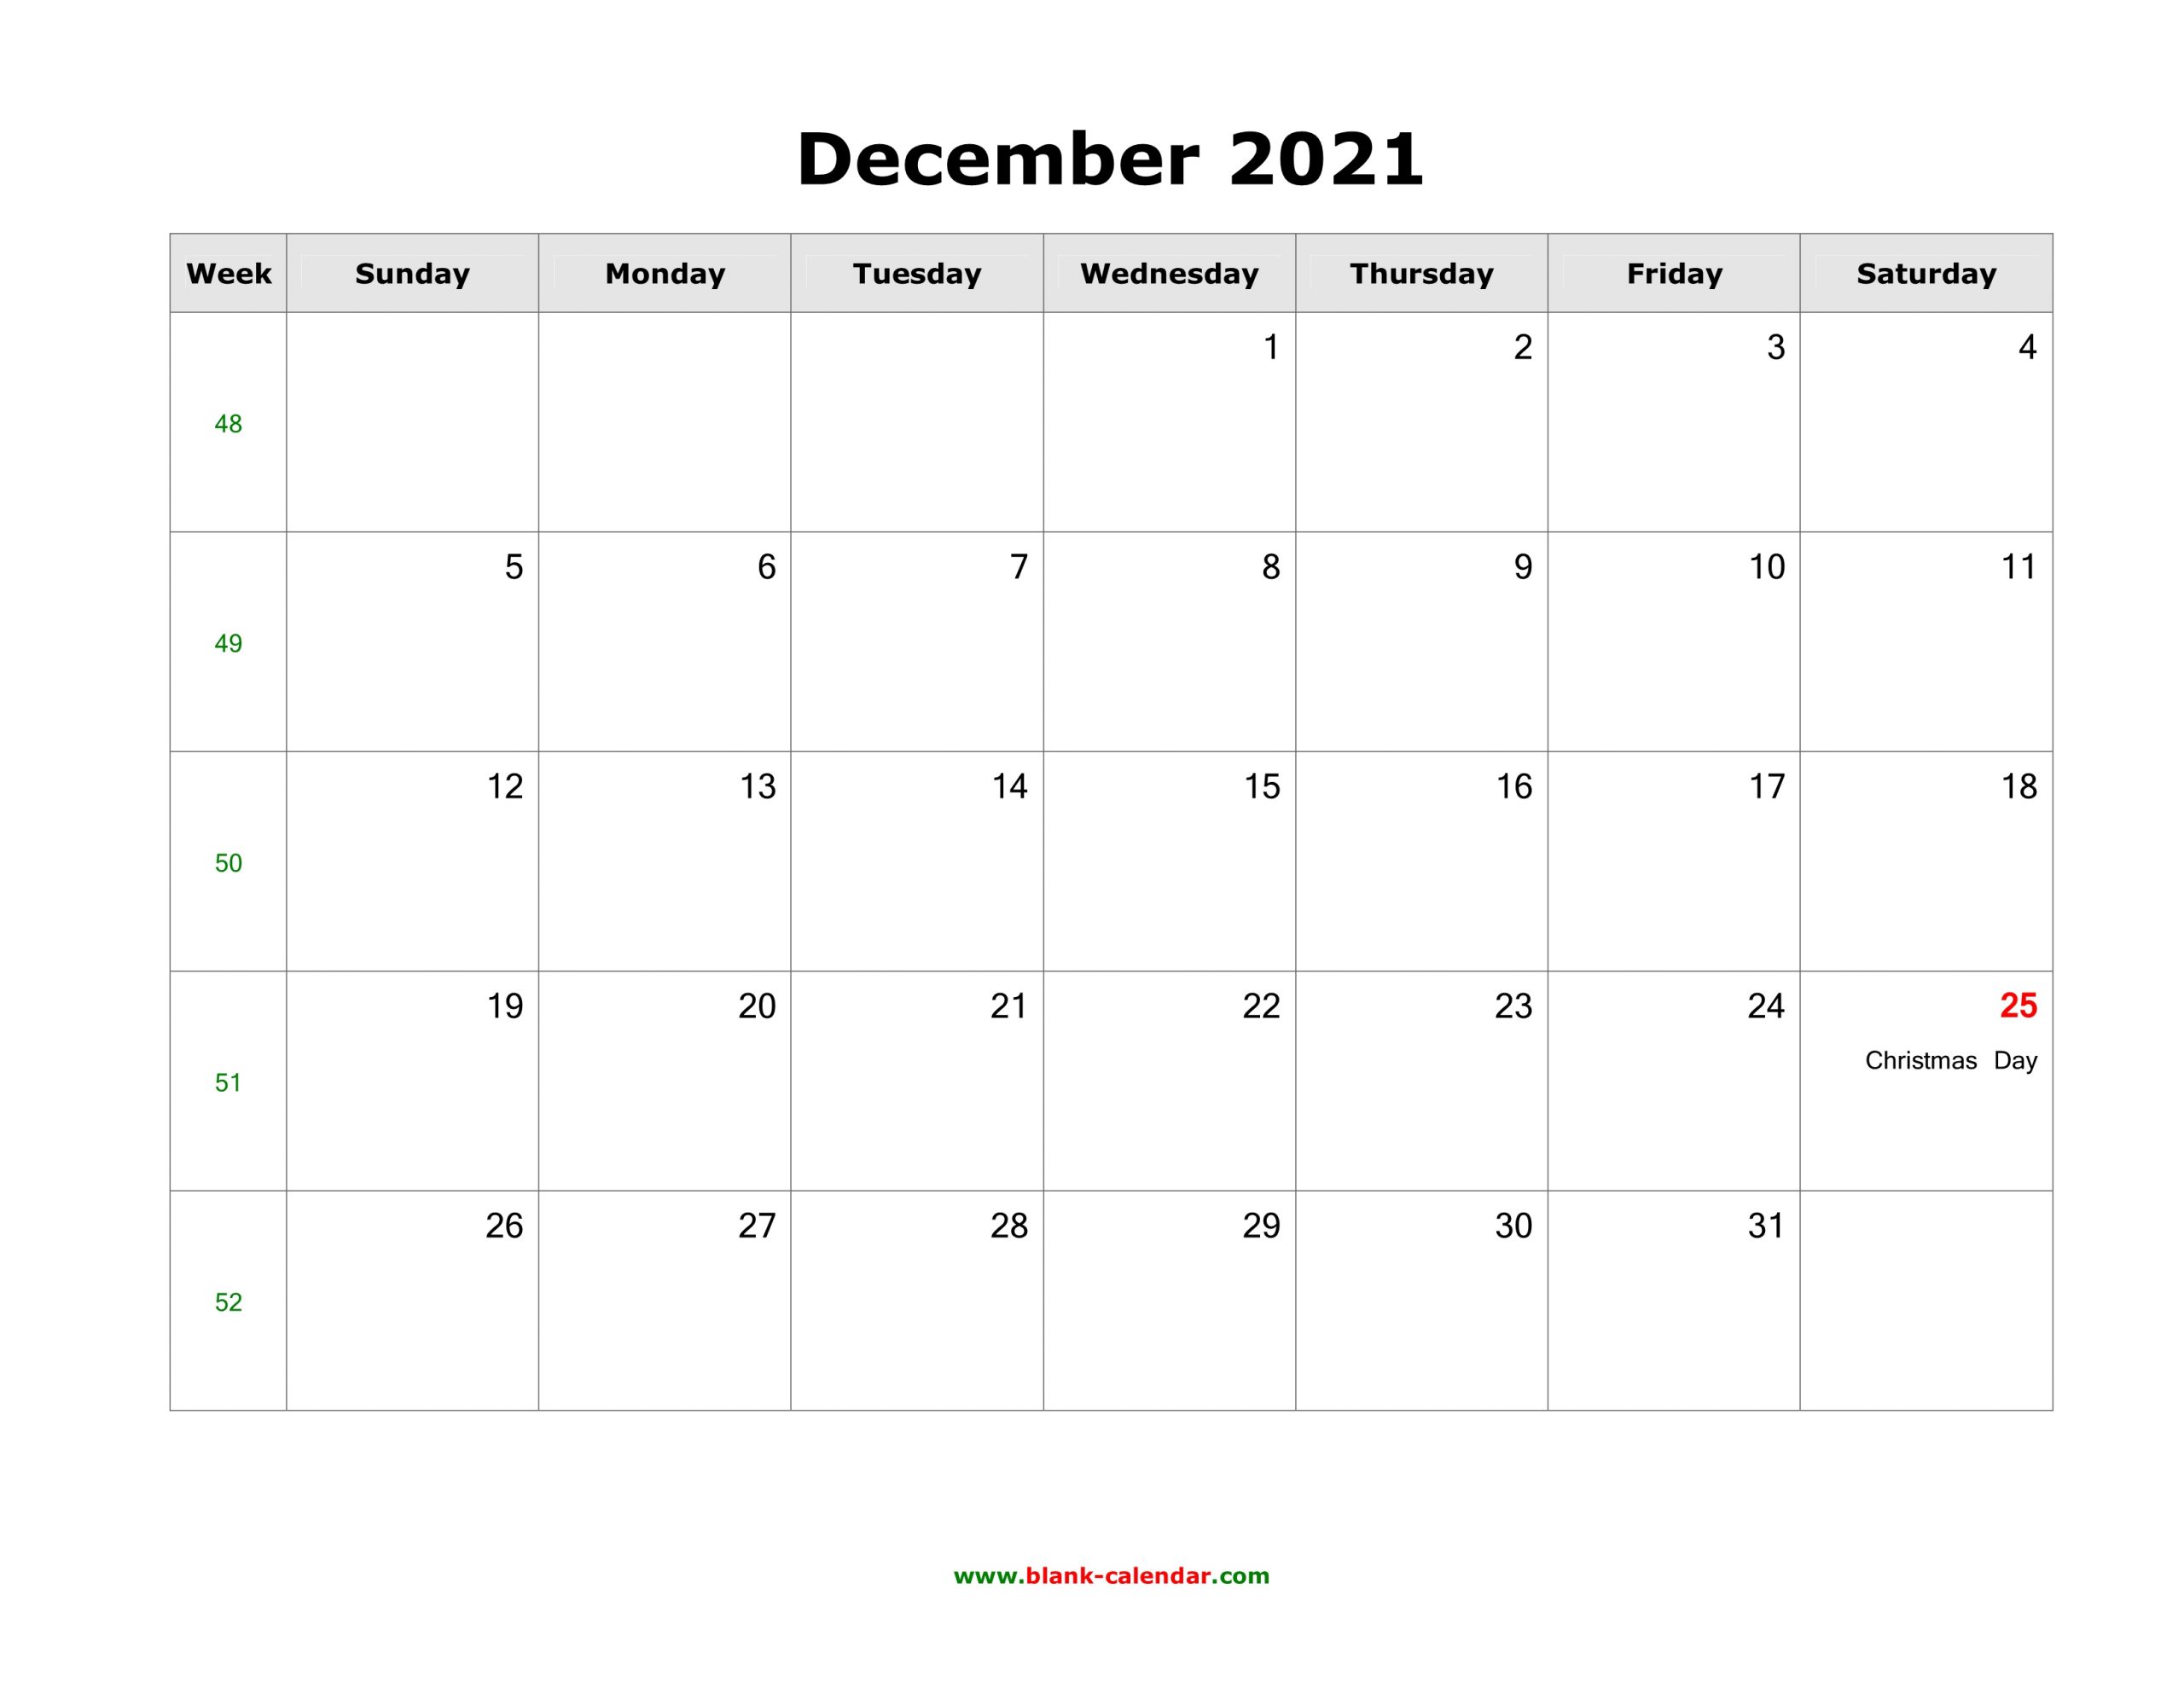 December 2021 Blank Calendar | Free Download Calendar December 2021 Calendar With Holidays